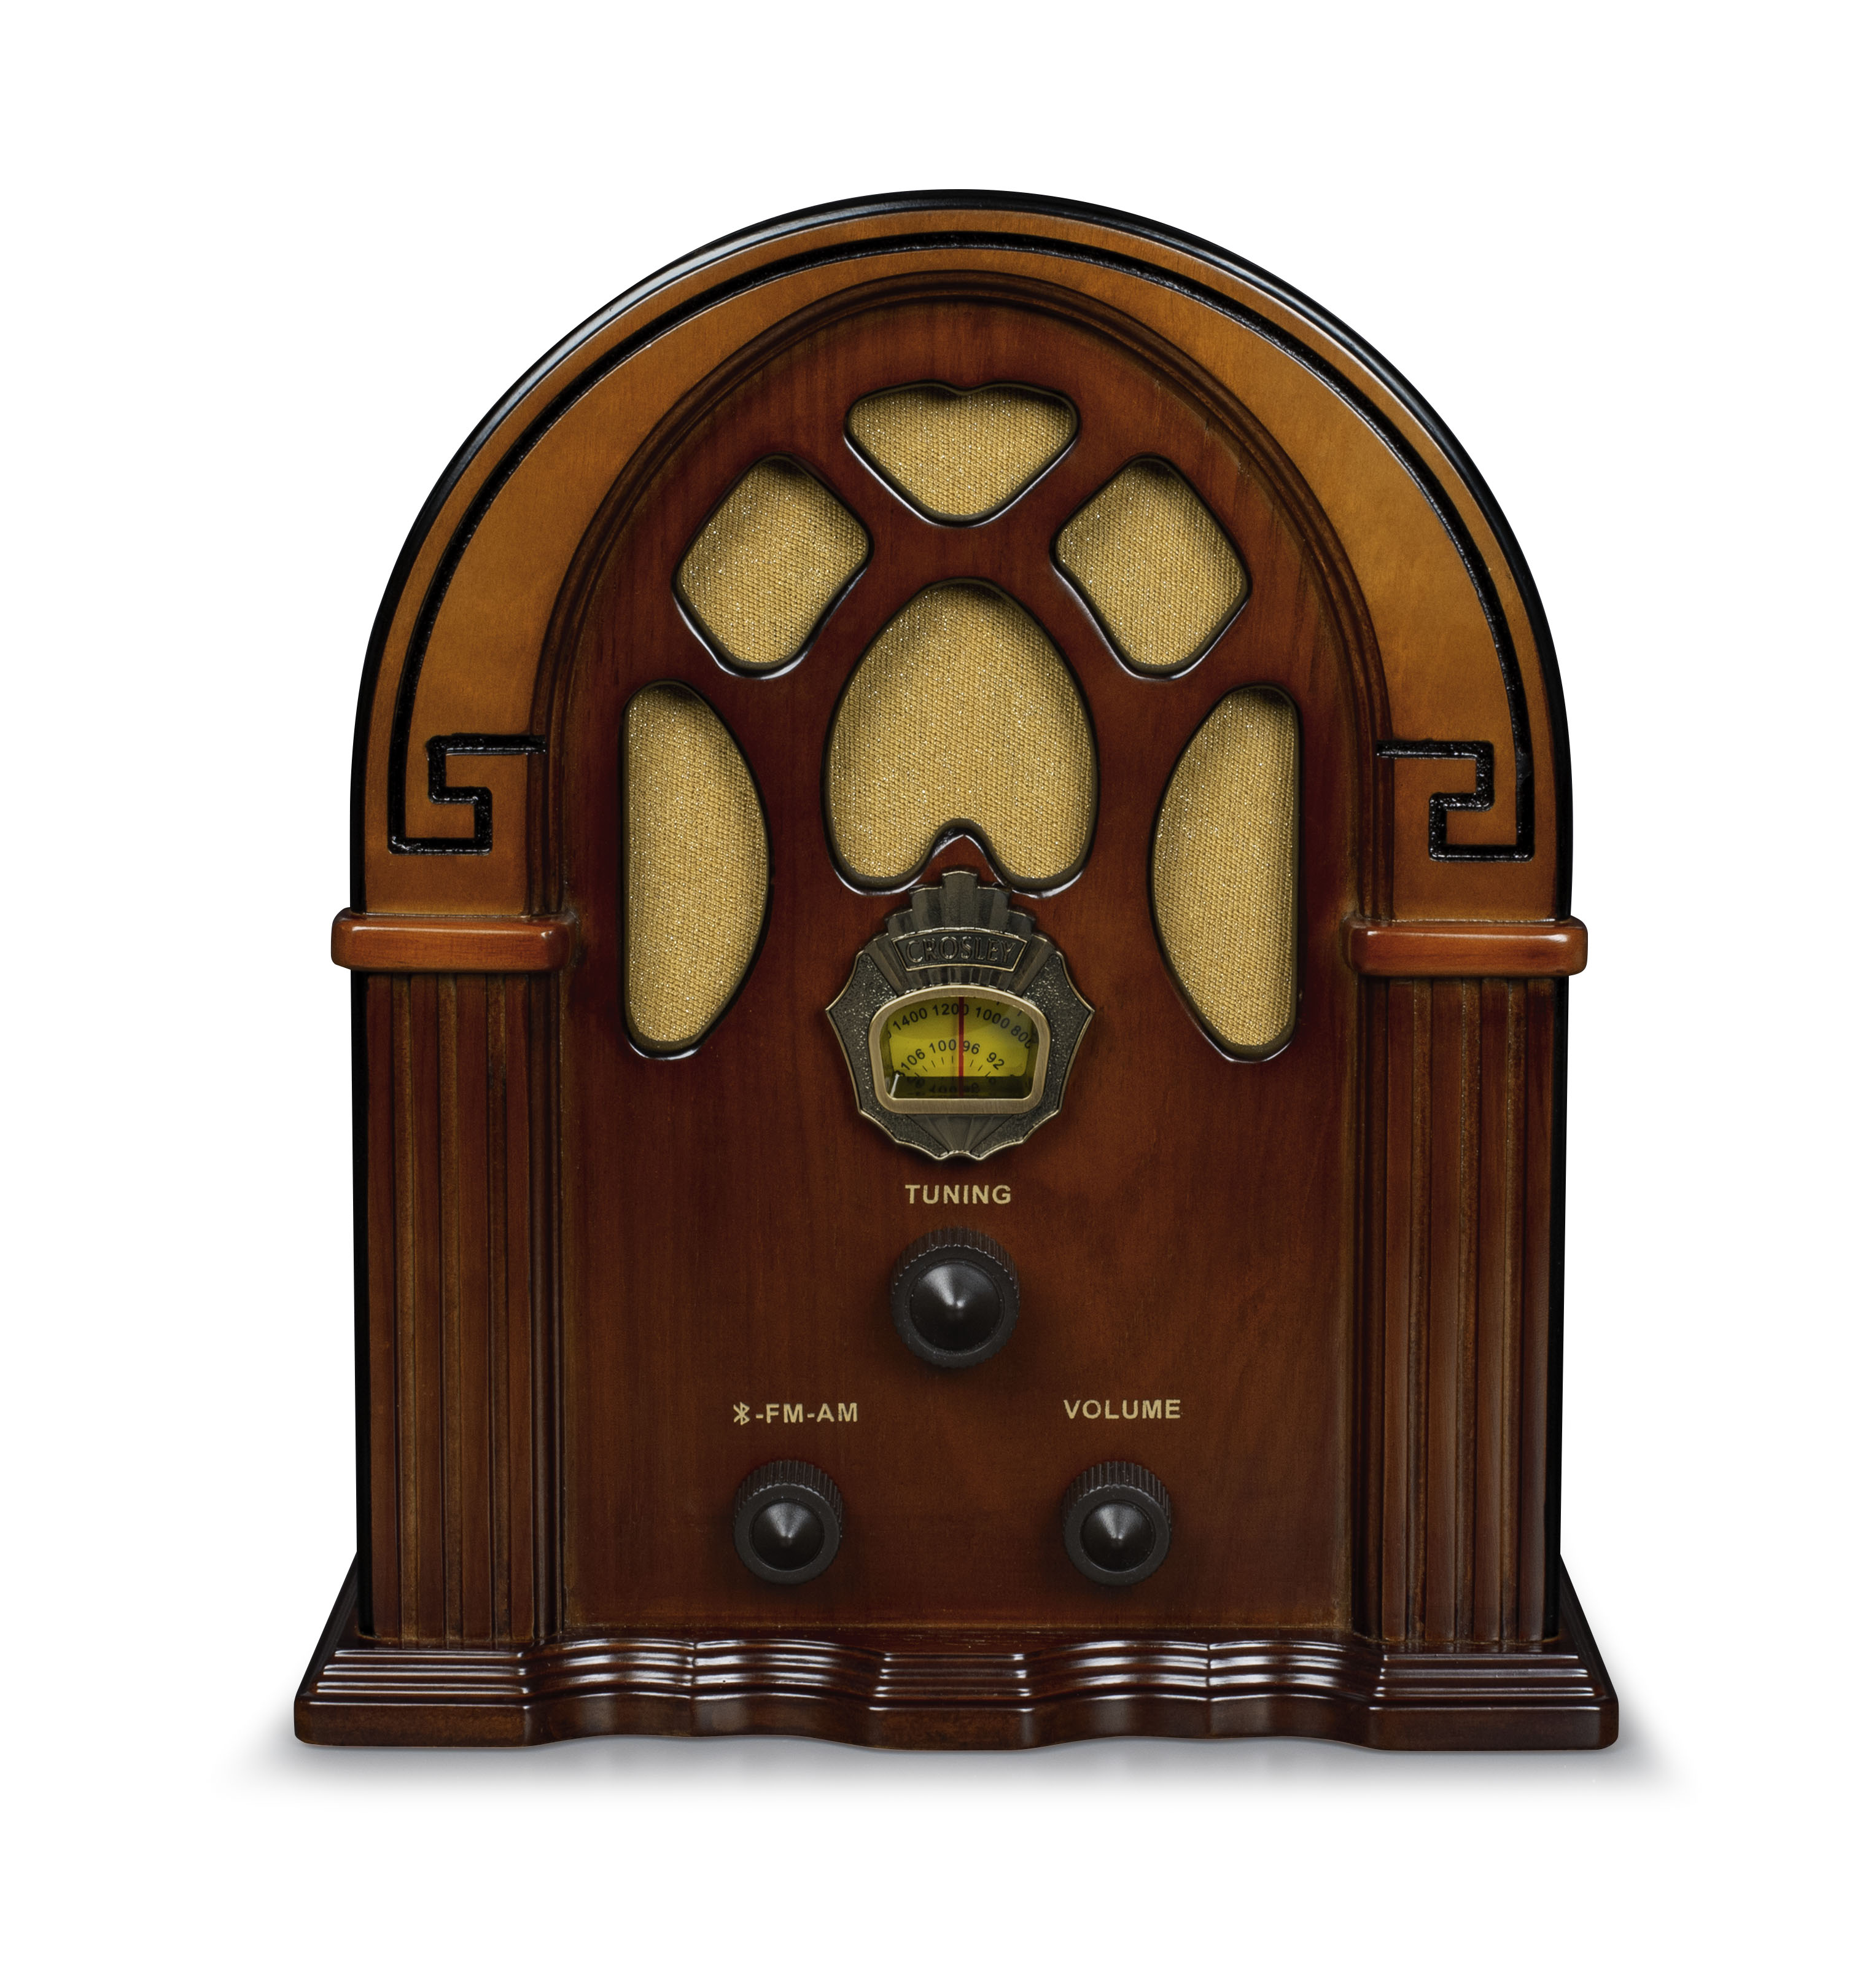 Crosley Portable AM/FM Radio, Walnut, CR31D-WA - image 3 of 8